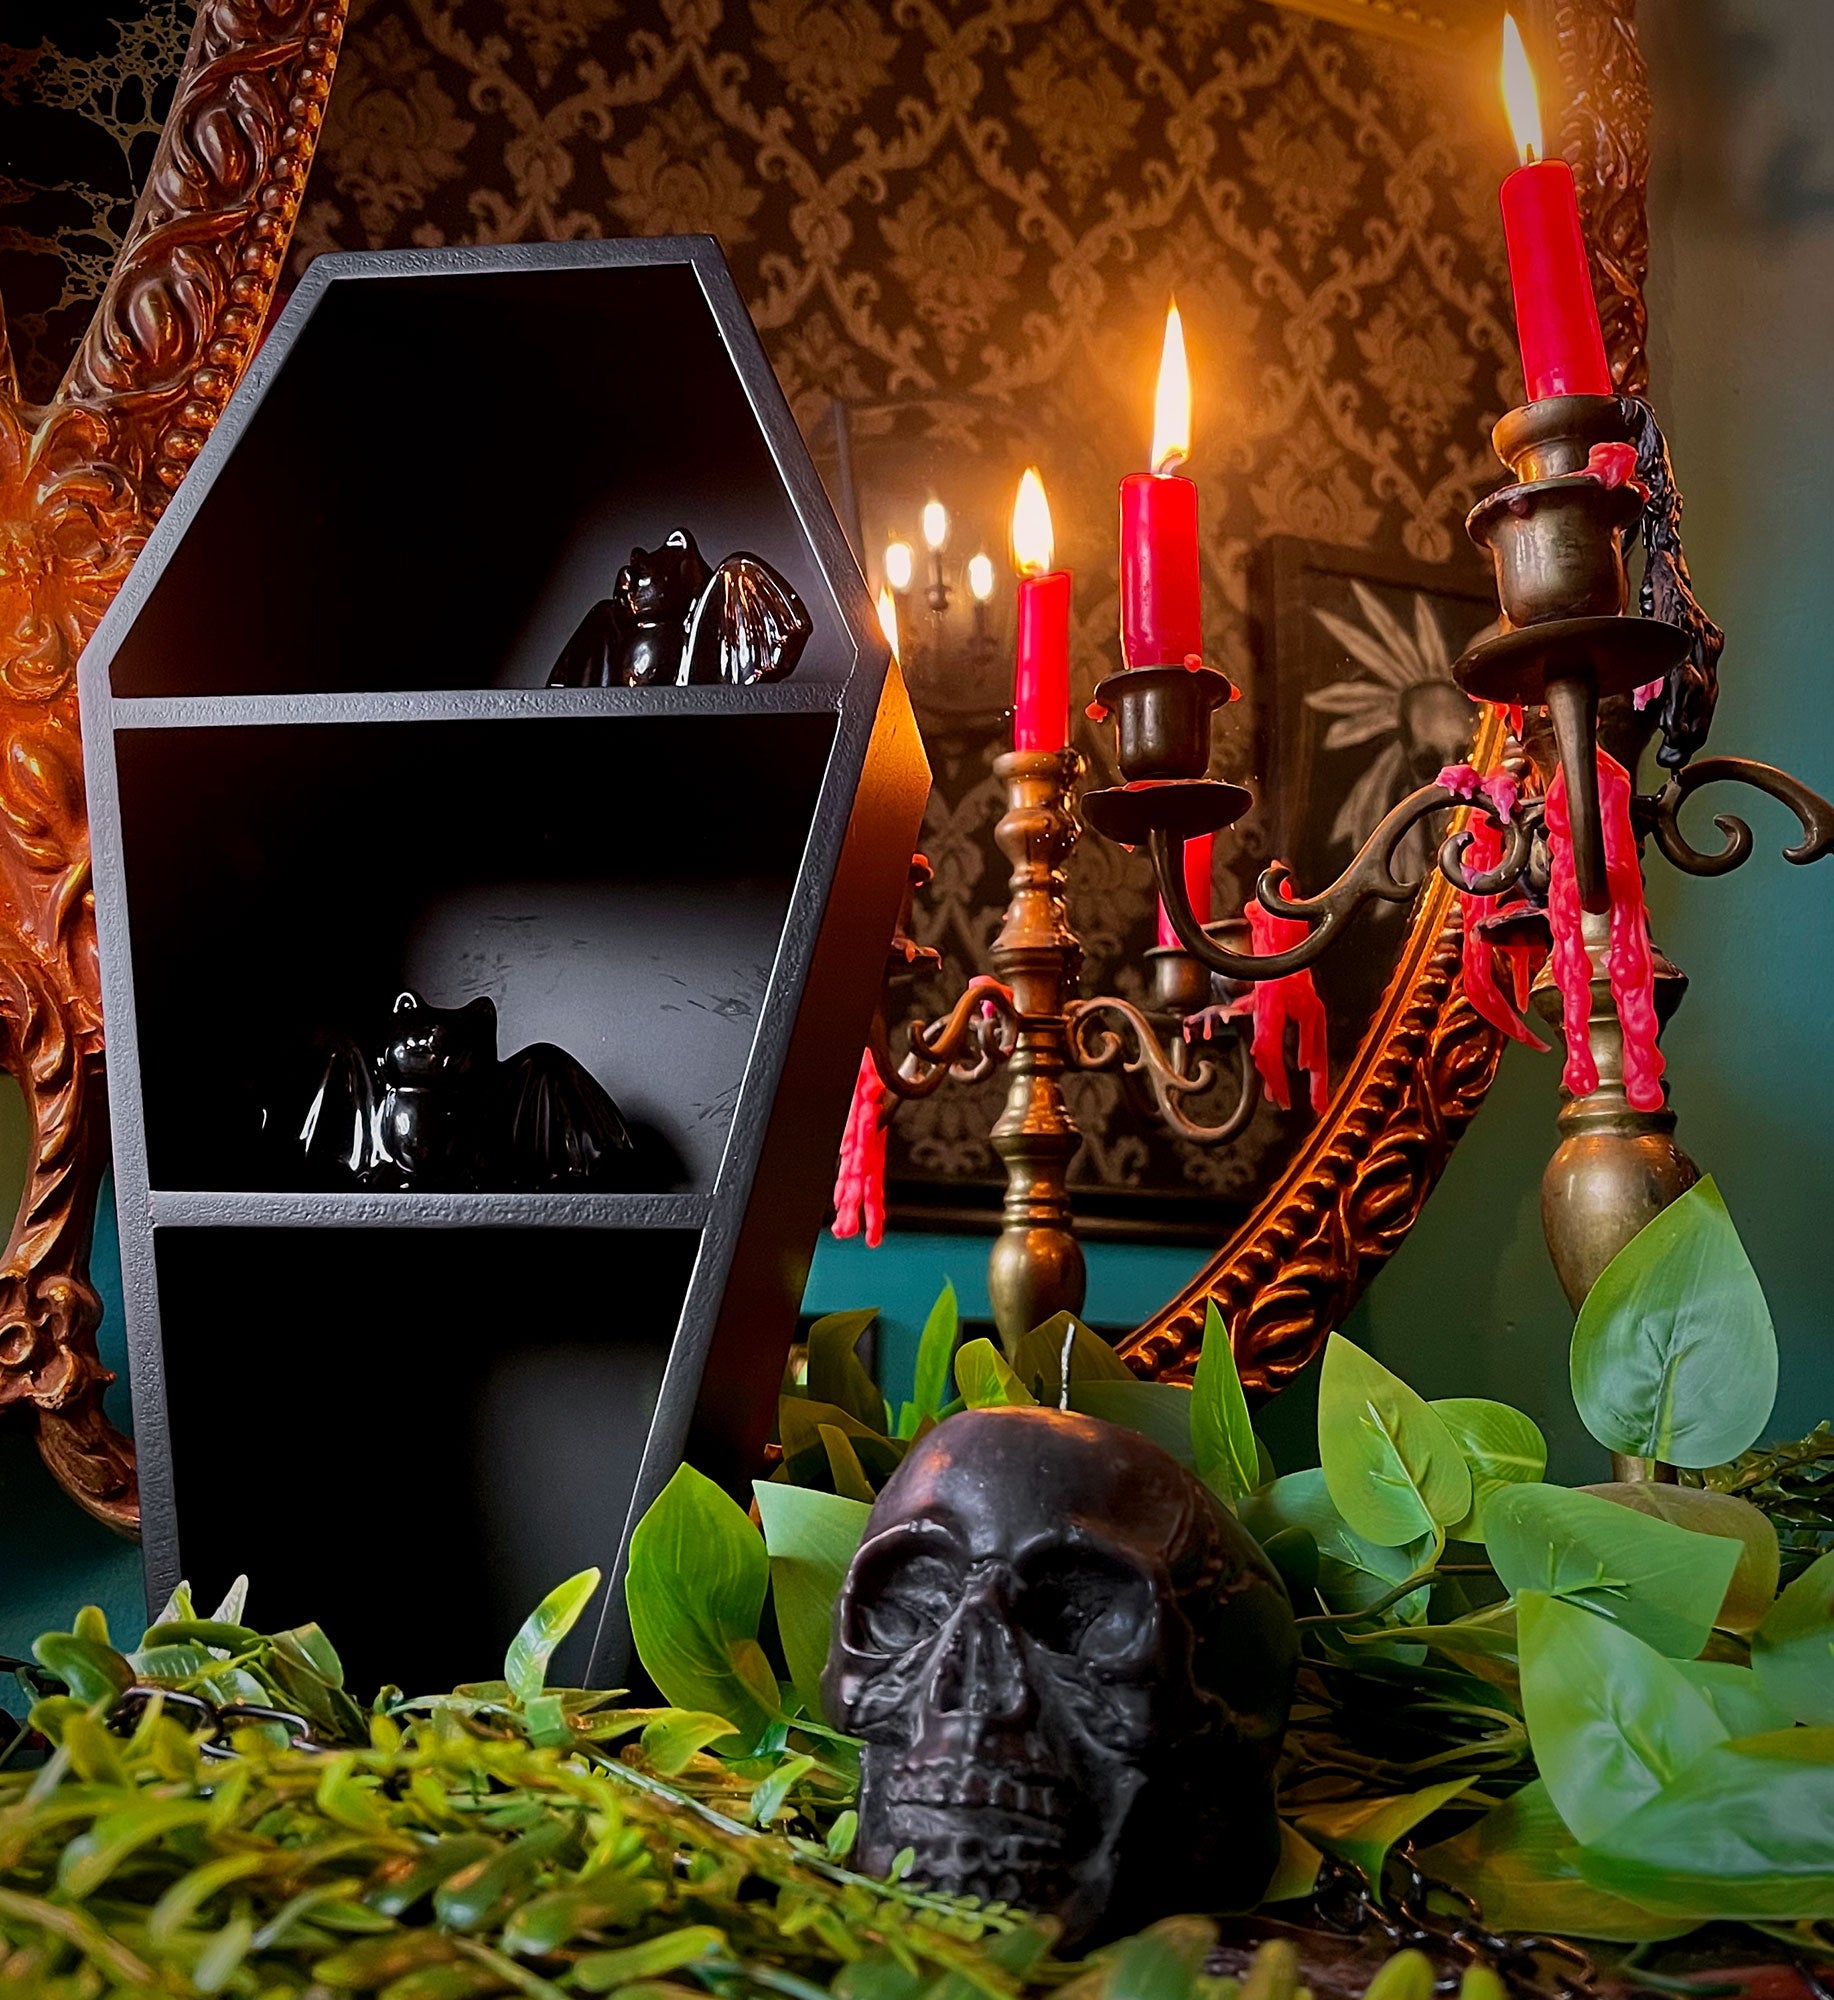 Sourpuss Clothing - Anatomical Skull Black - Candle